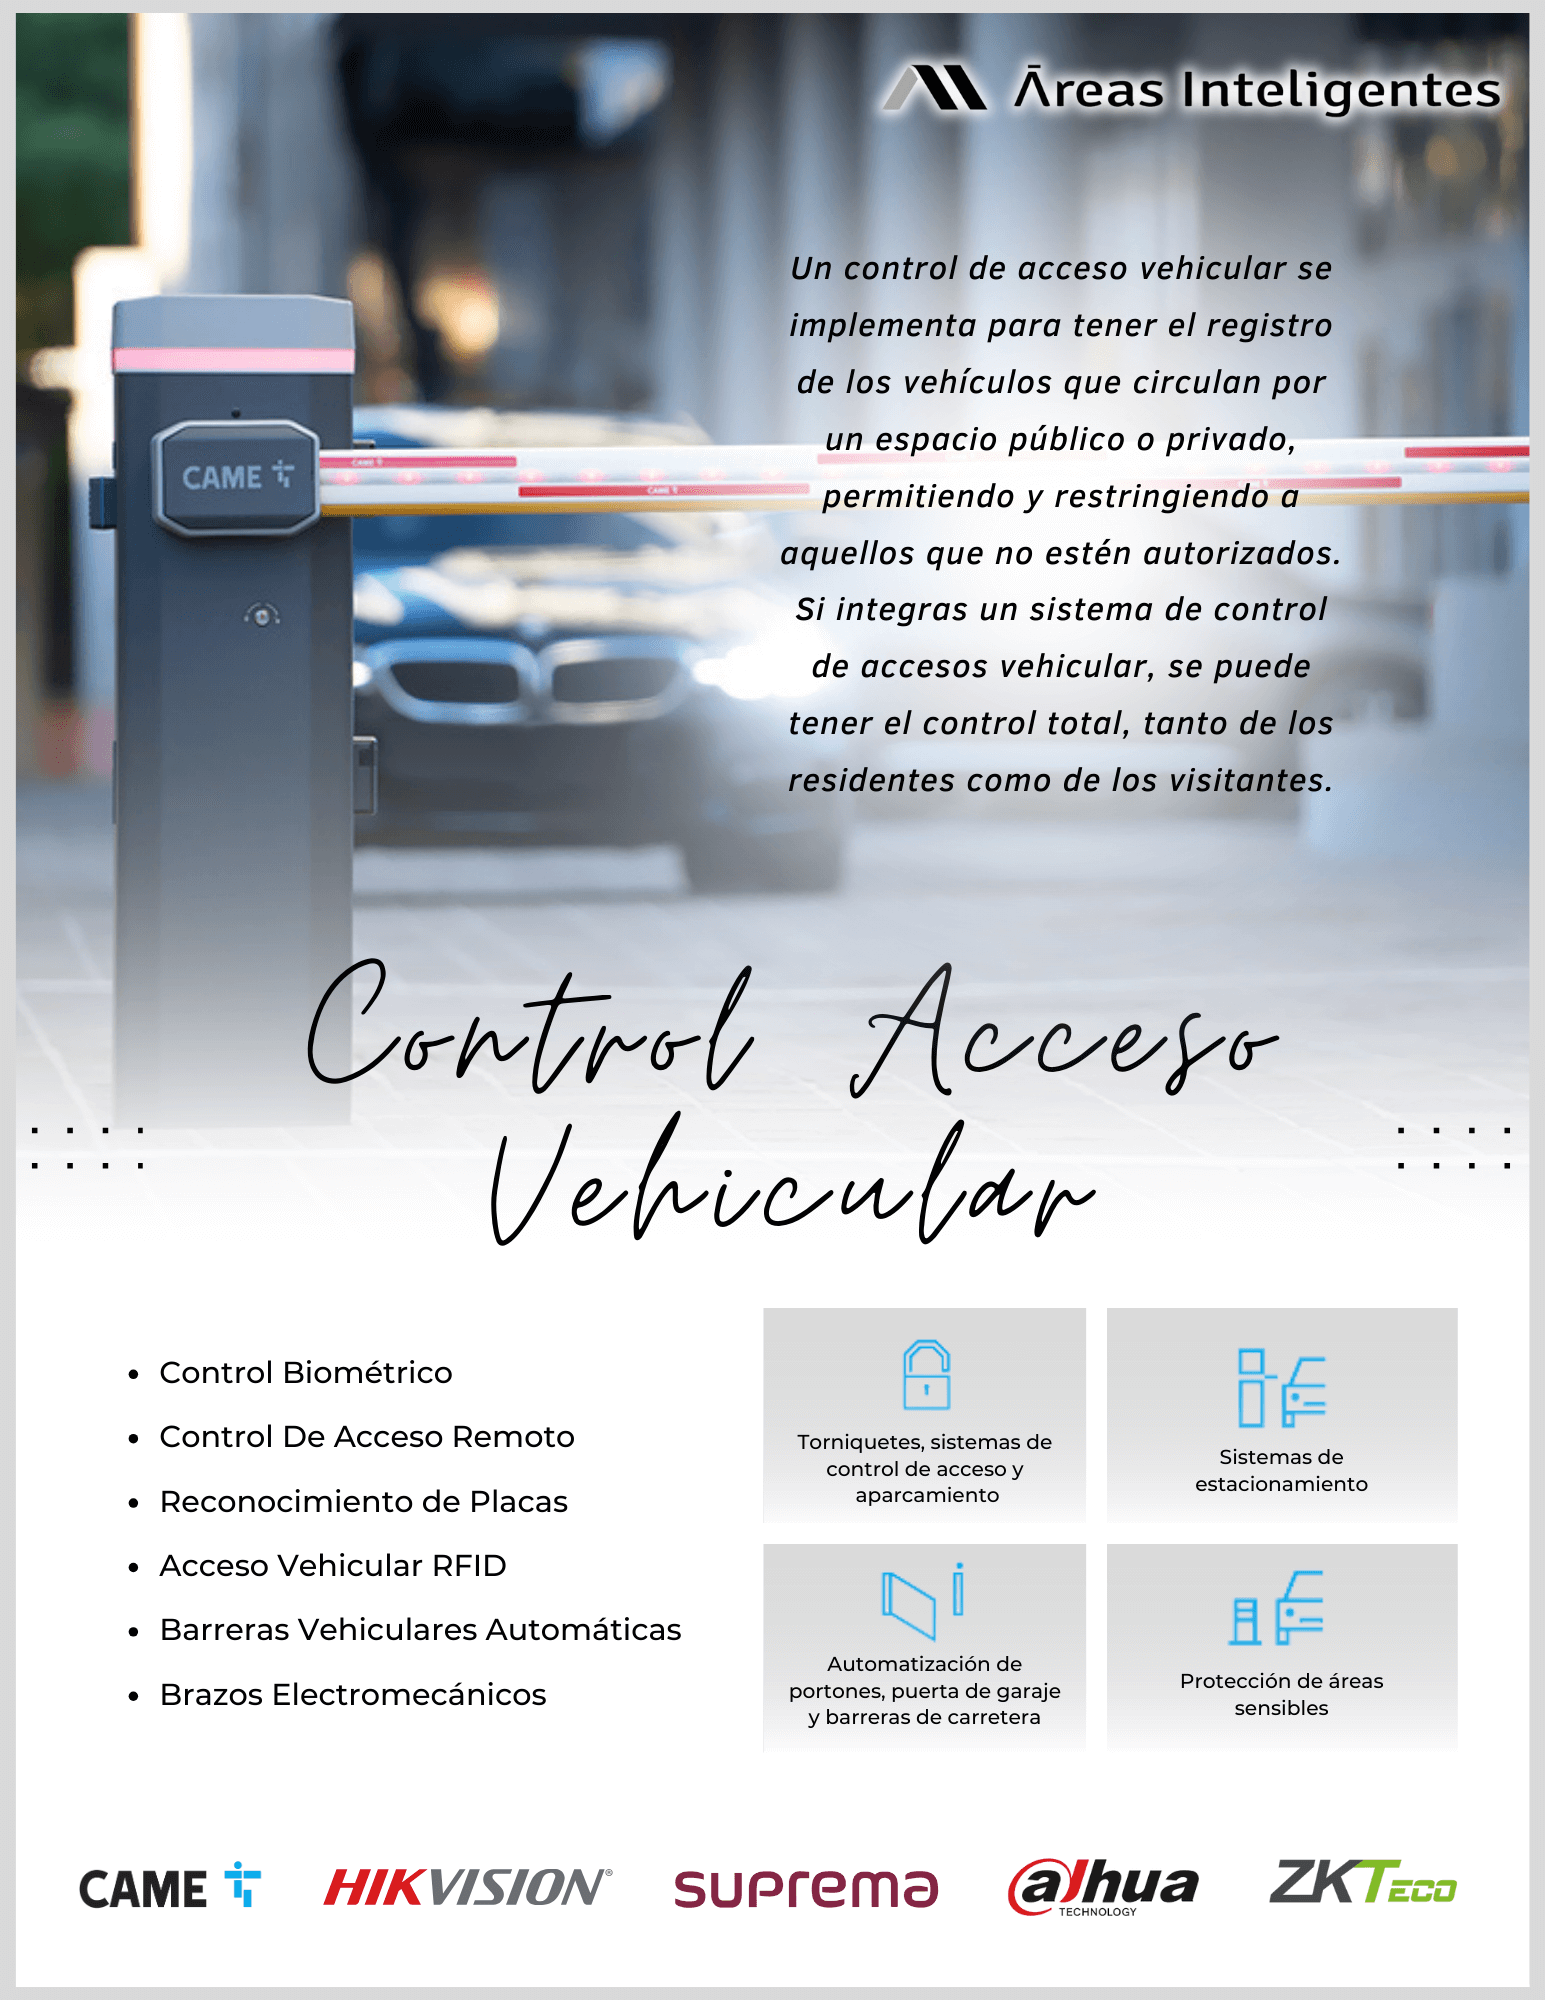 Control de acceso vehicularde acceso vehicular